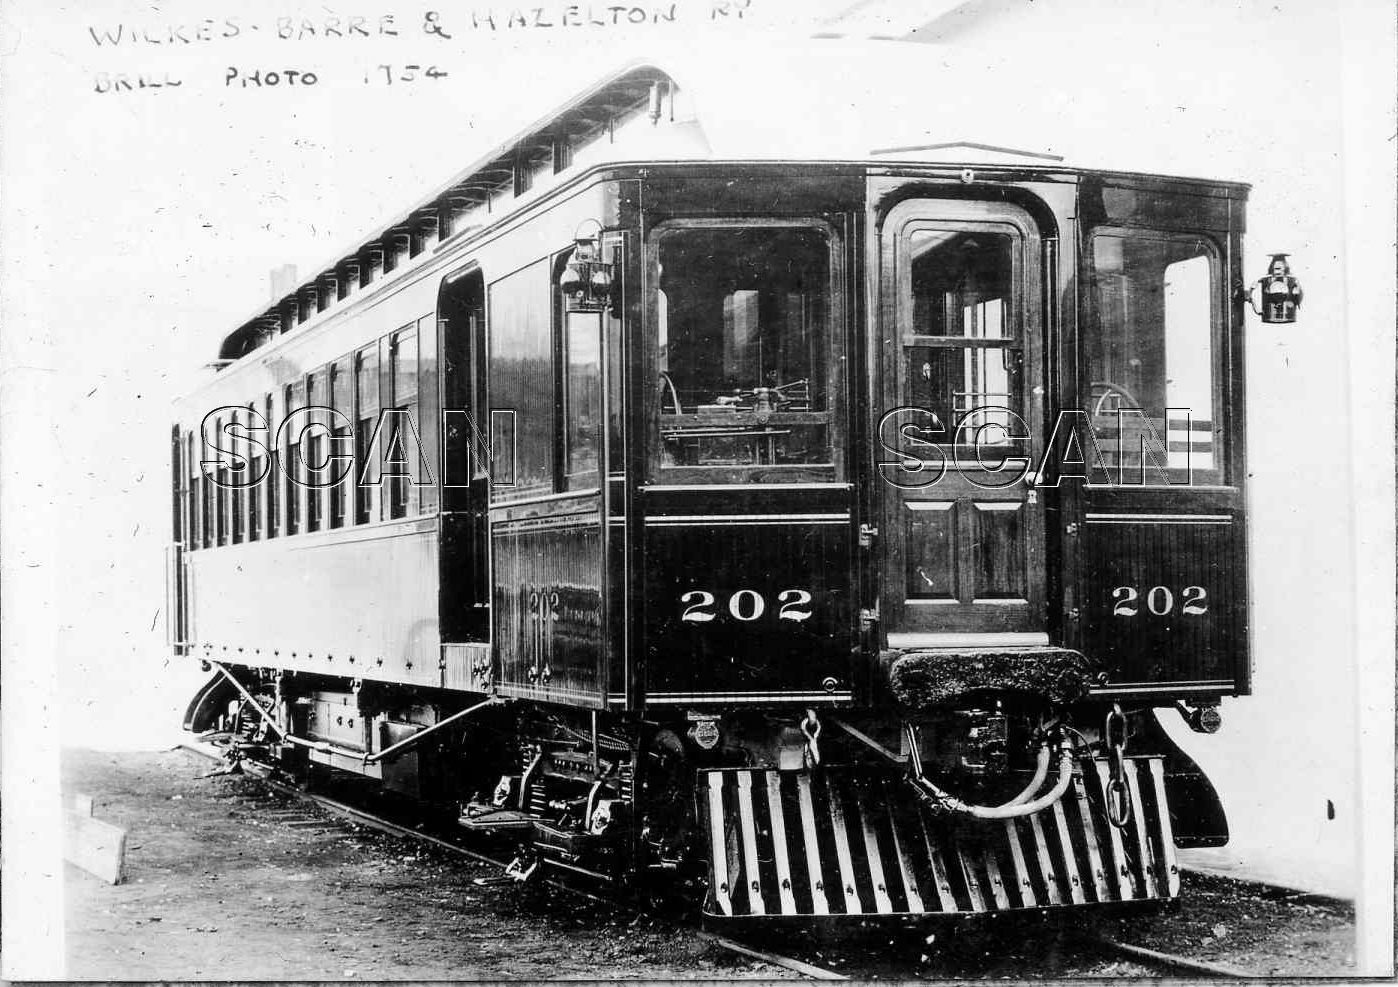 2C423 SMALL RP 1930s? WILKES BARRE & HAZELTON RAILWAY COMBINE CAR #202